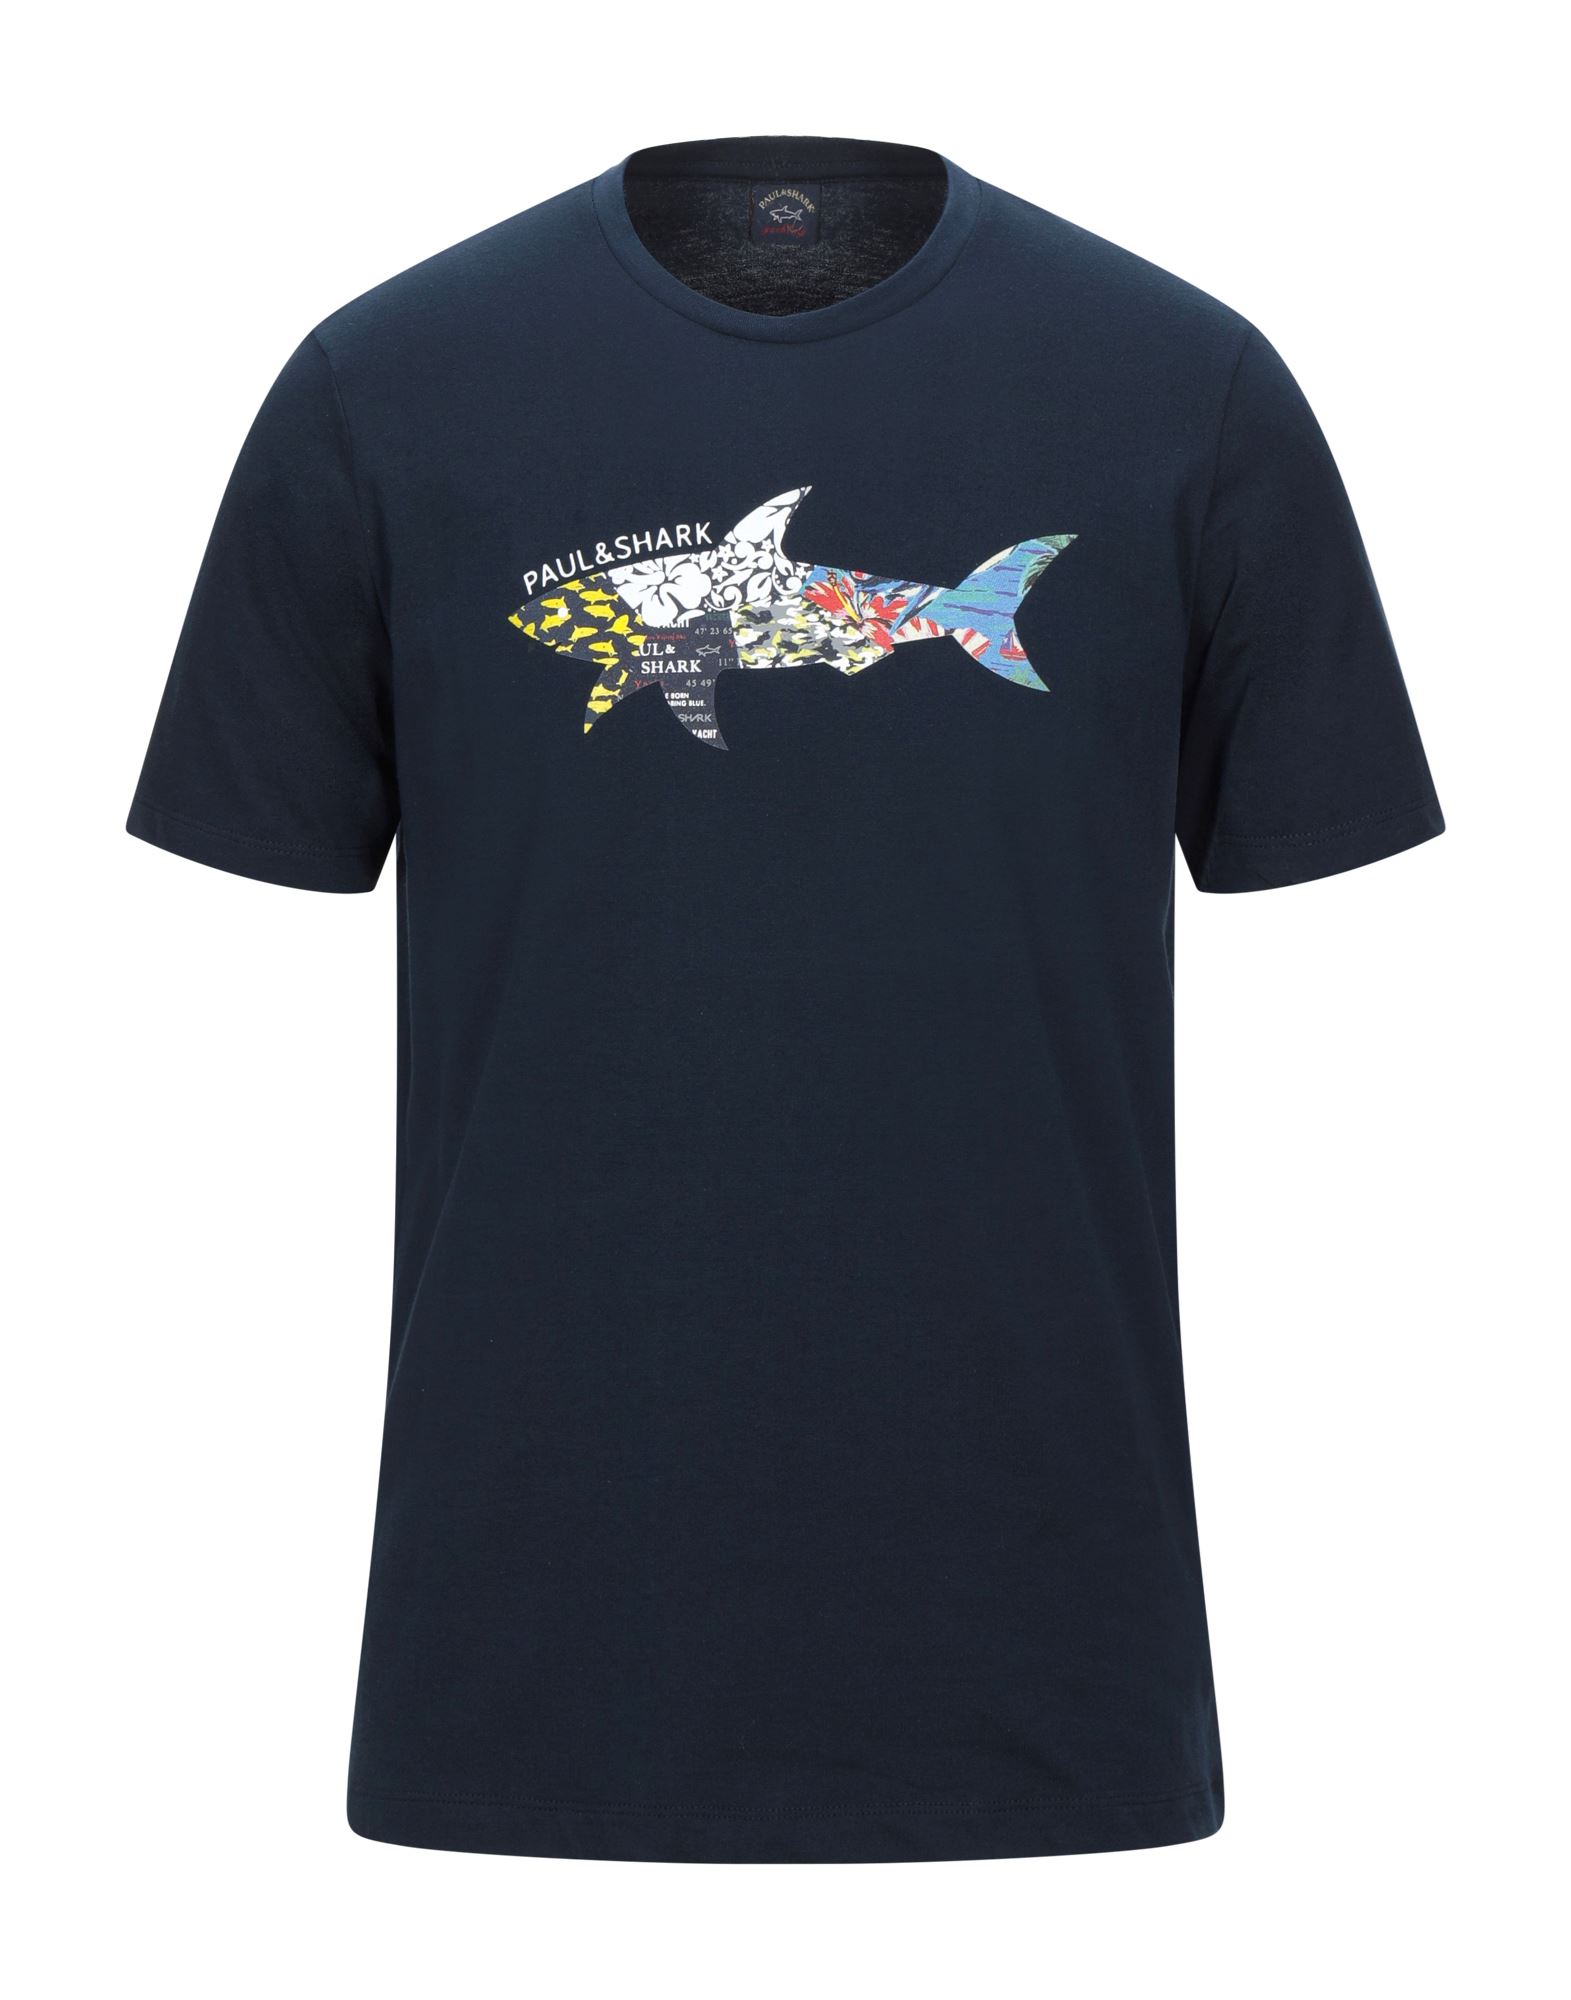 PAUL & SHARK T-shirts - Item 12538189